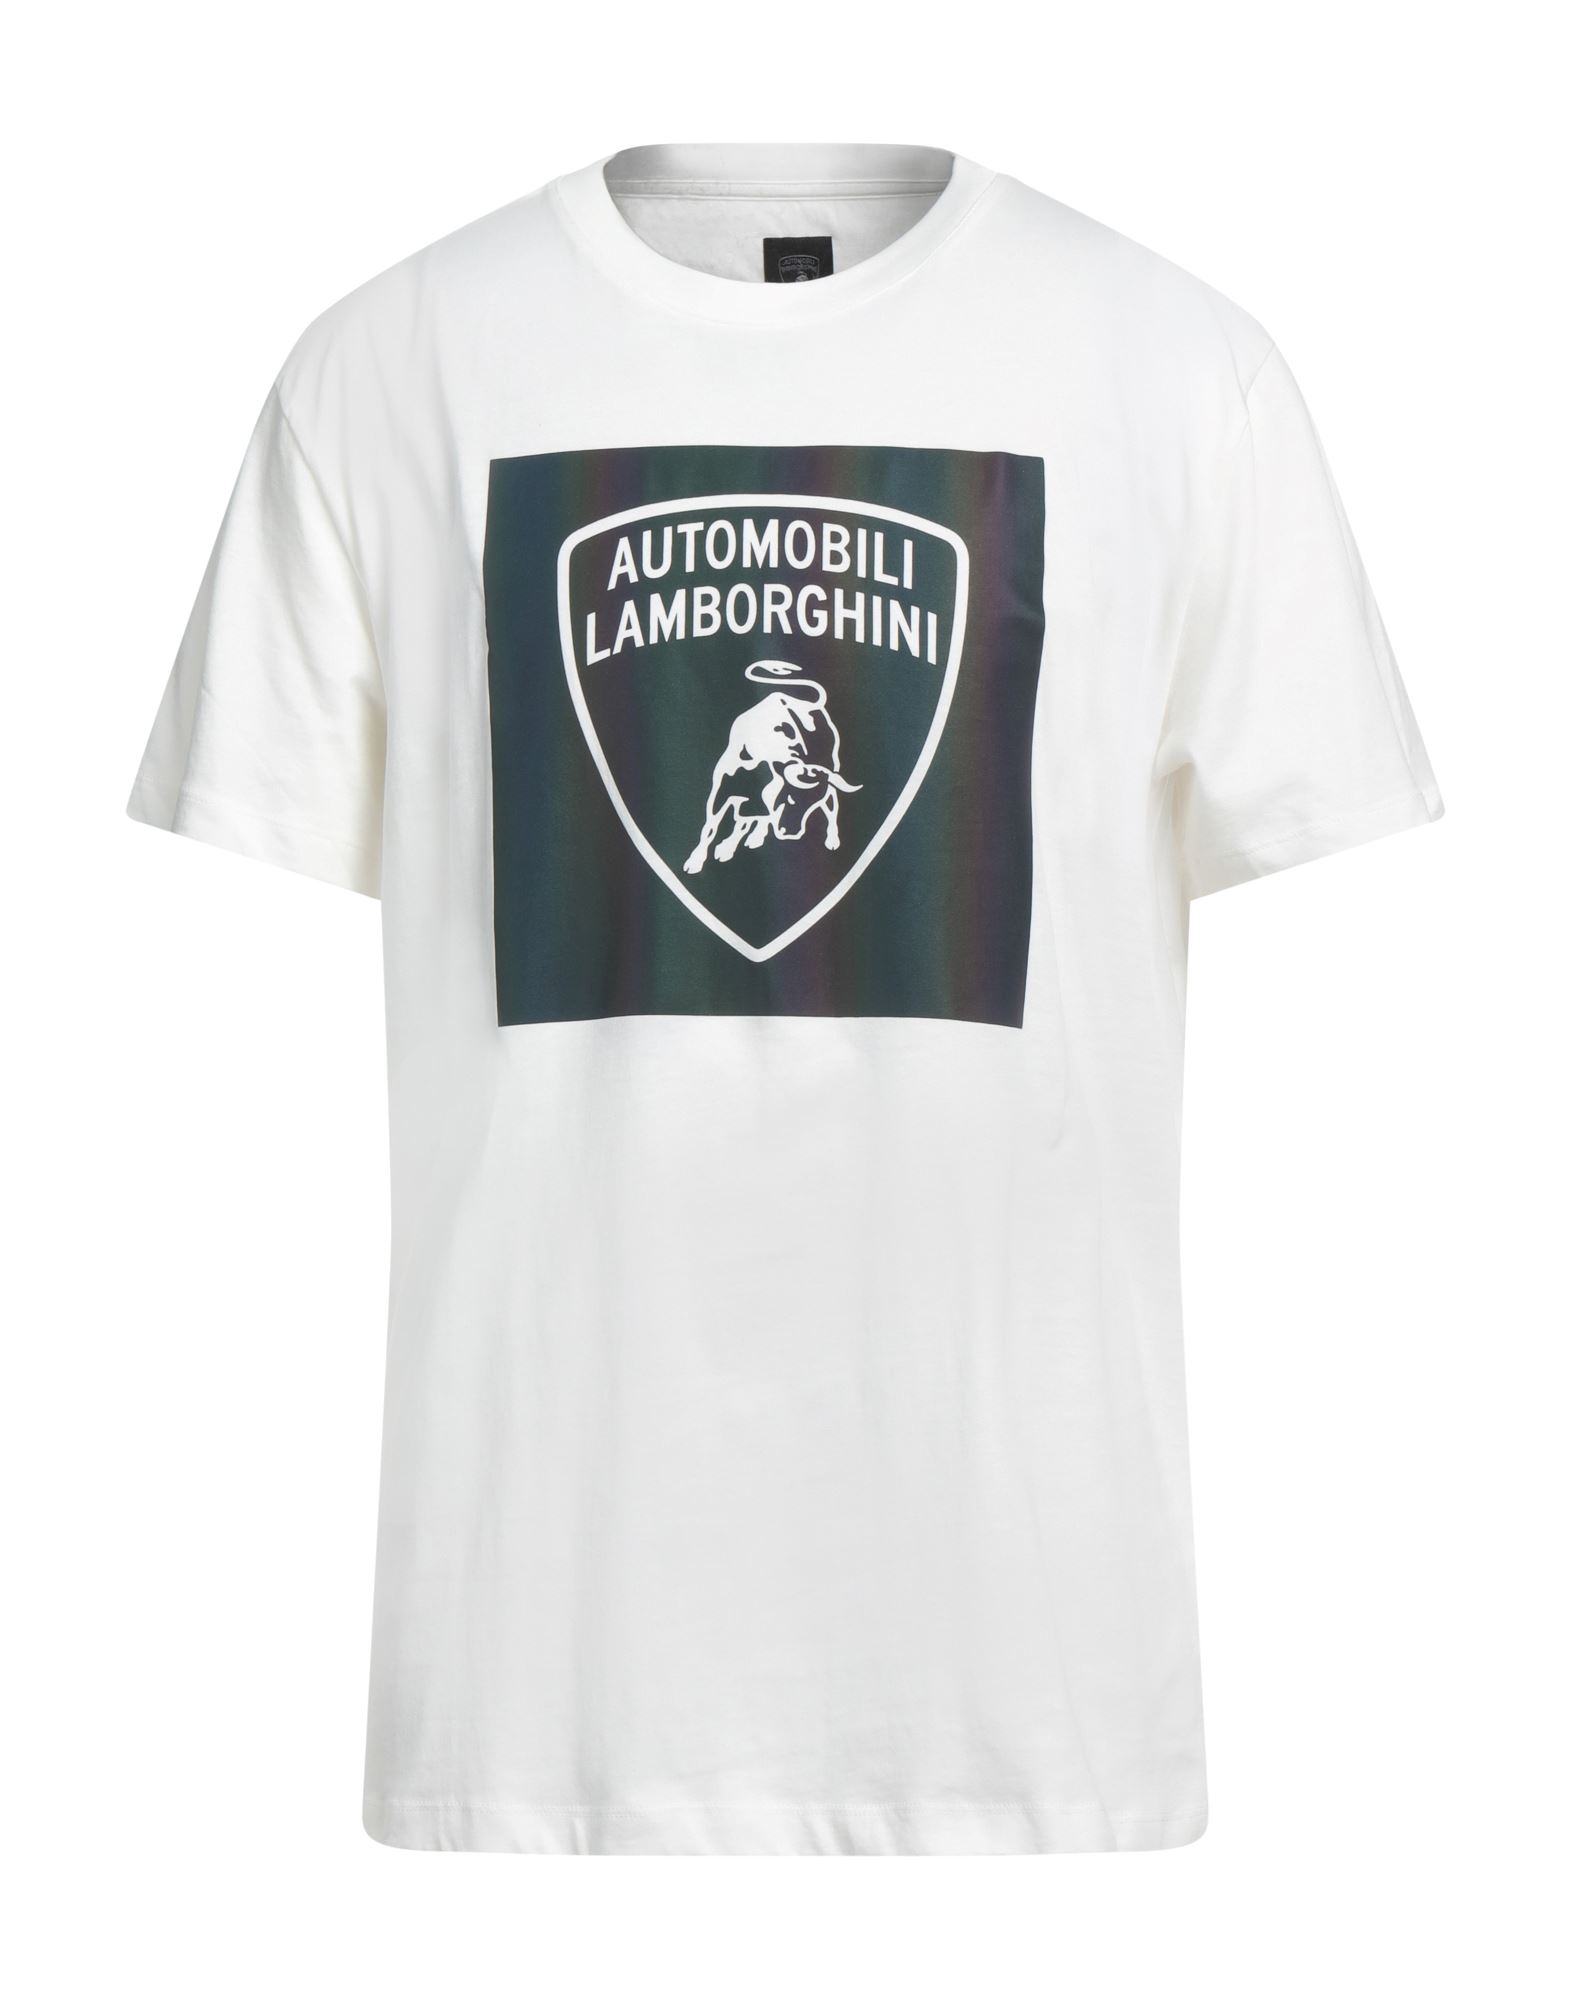 AUTOMOBILI LAMBORGHINI T-shirts Herren Weiß von AUTOMOBILI LAMBORGHINI